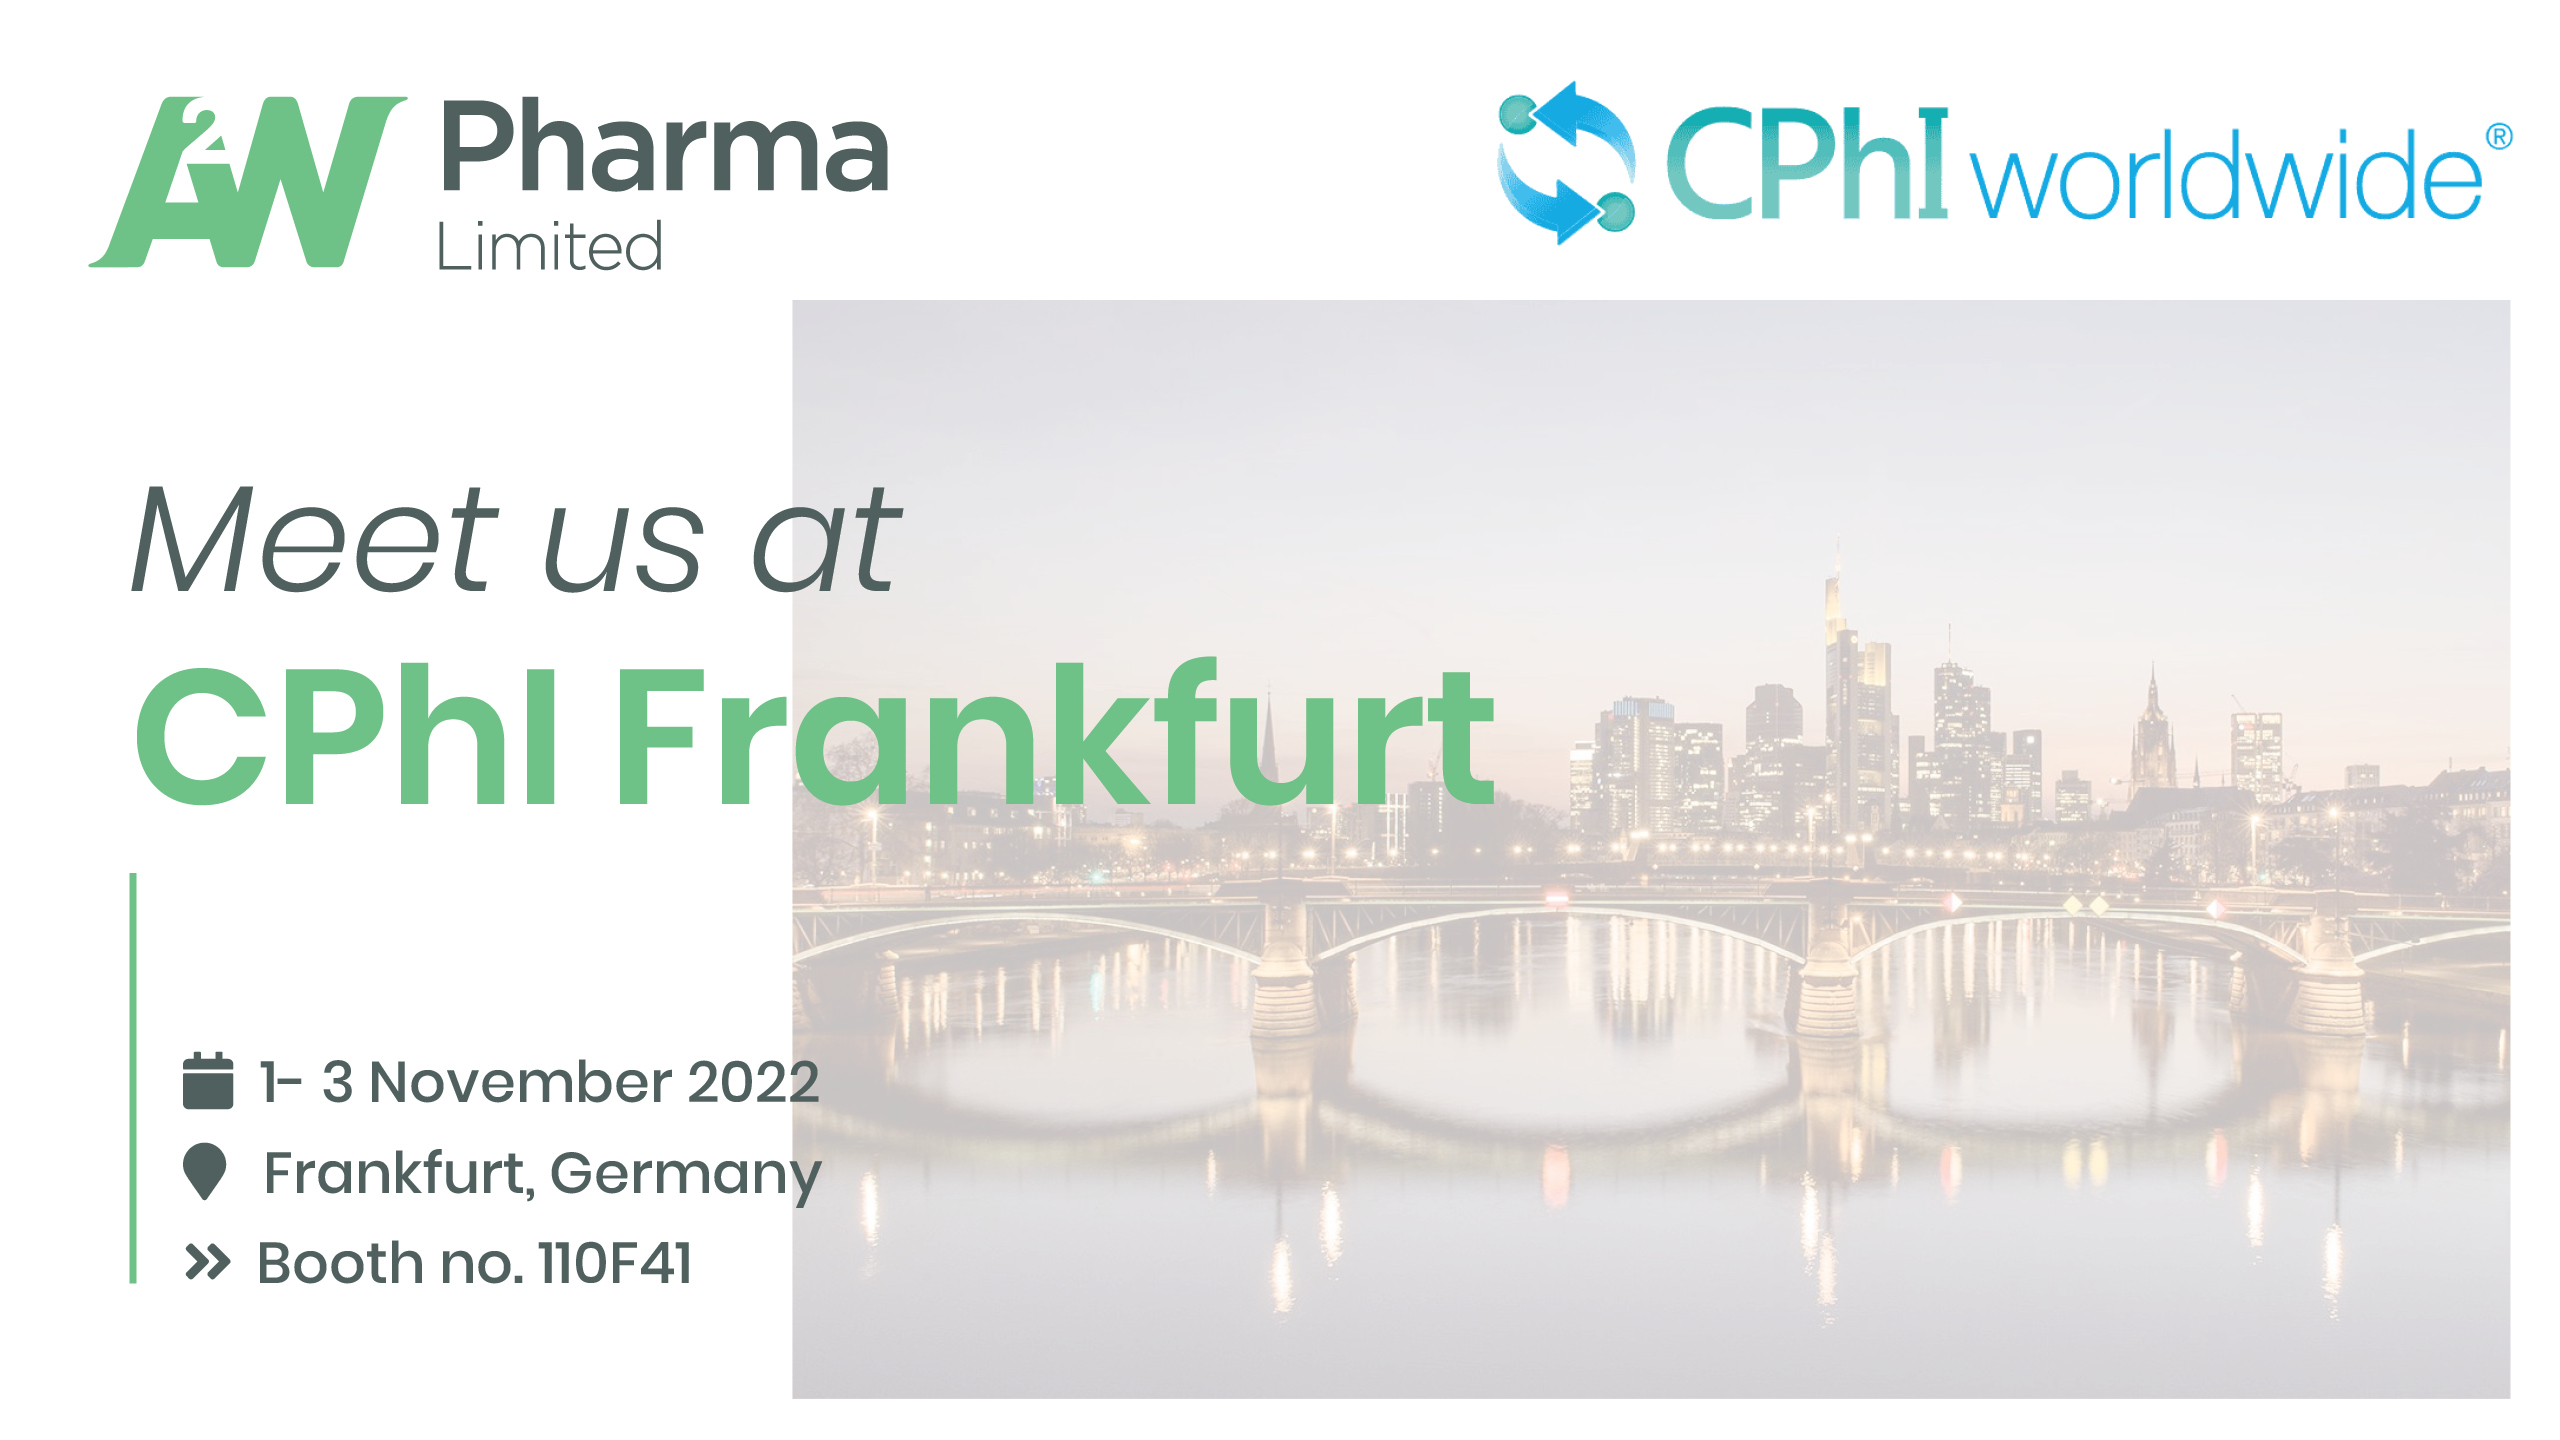 CPHI Worldwide In Frankfurt, 1-3 November 2022